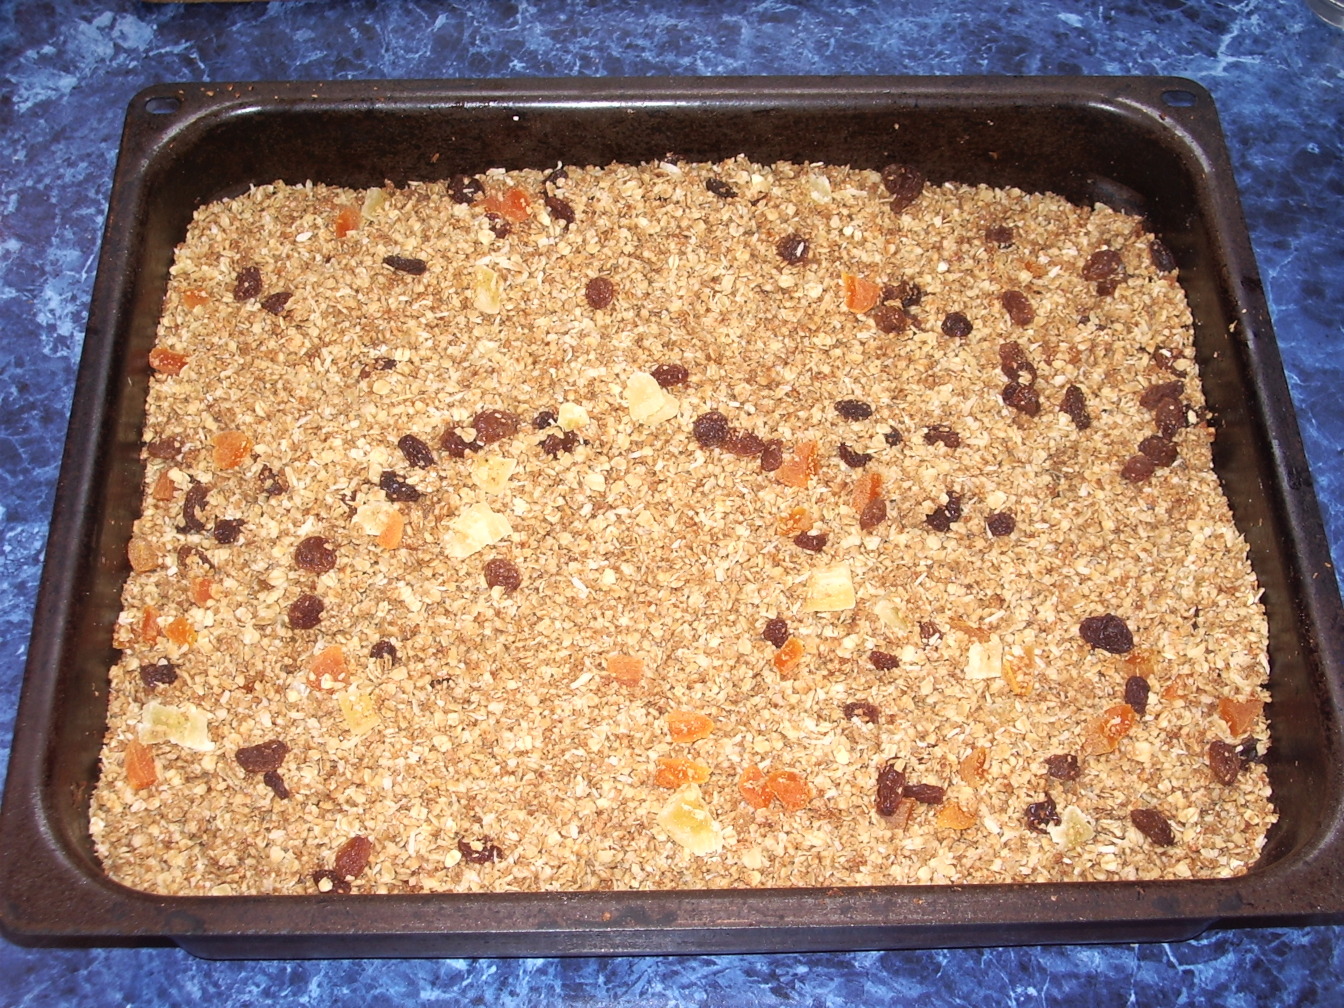 A tray of baked muesli